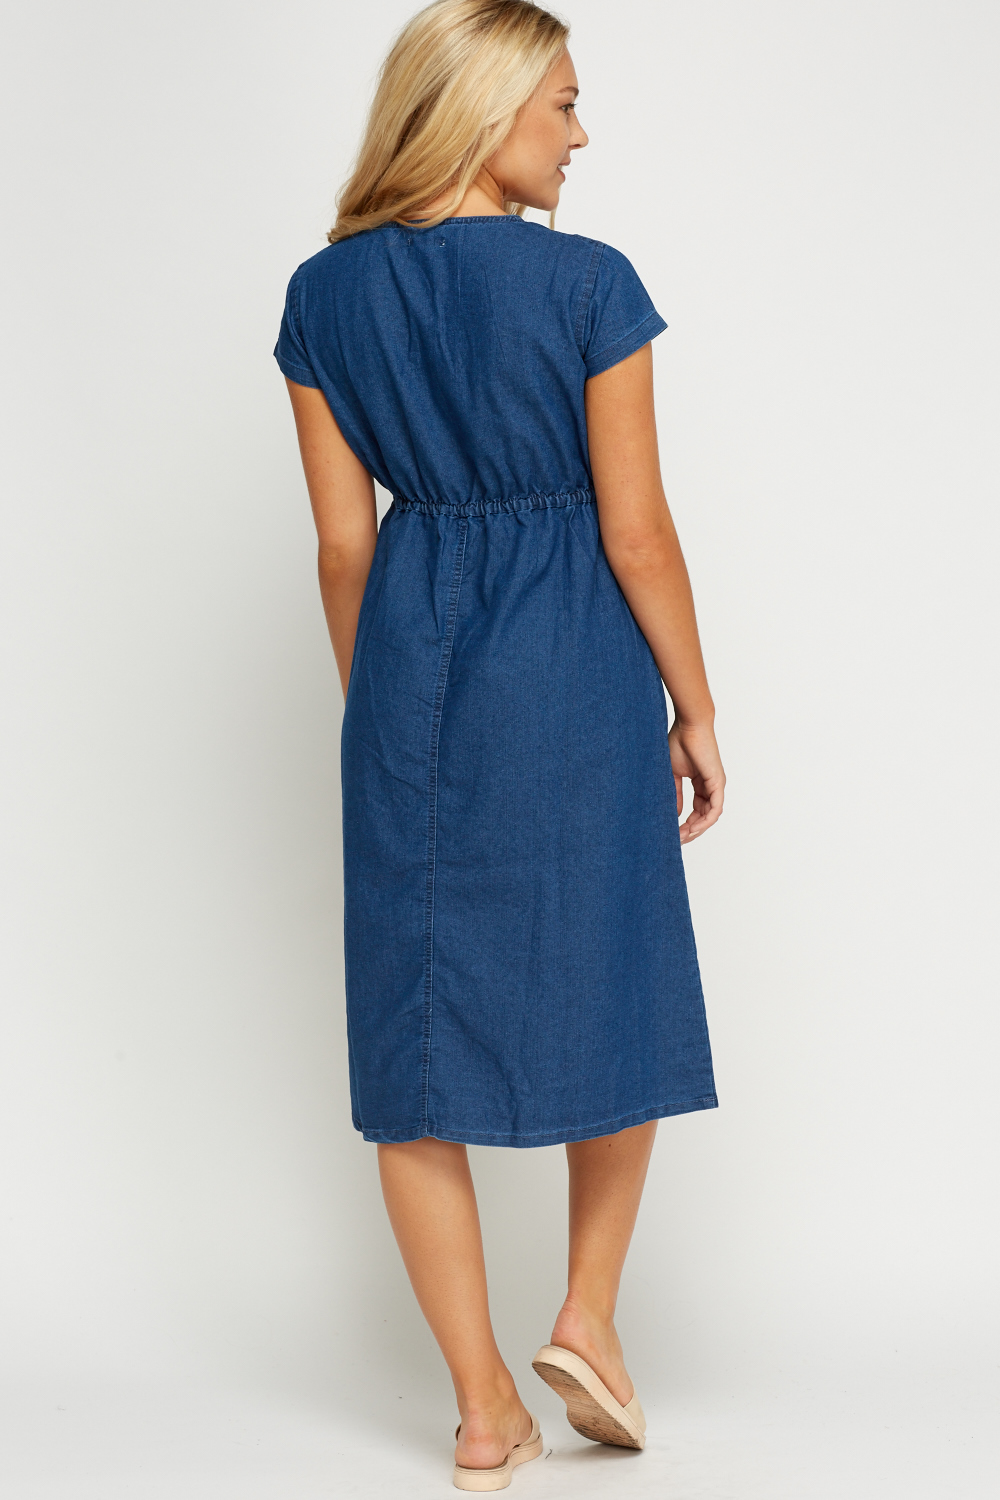 Cap Sleeve Denim Dress - Just $7